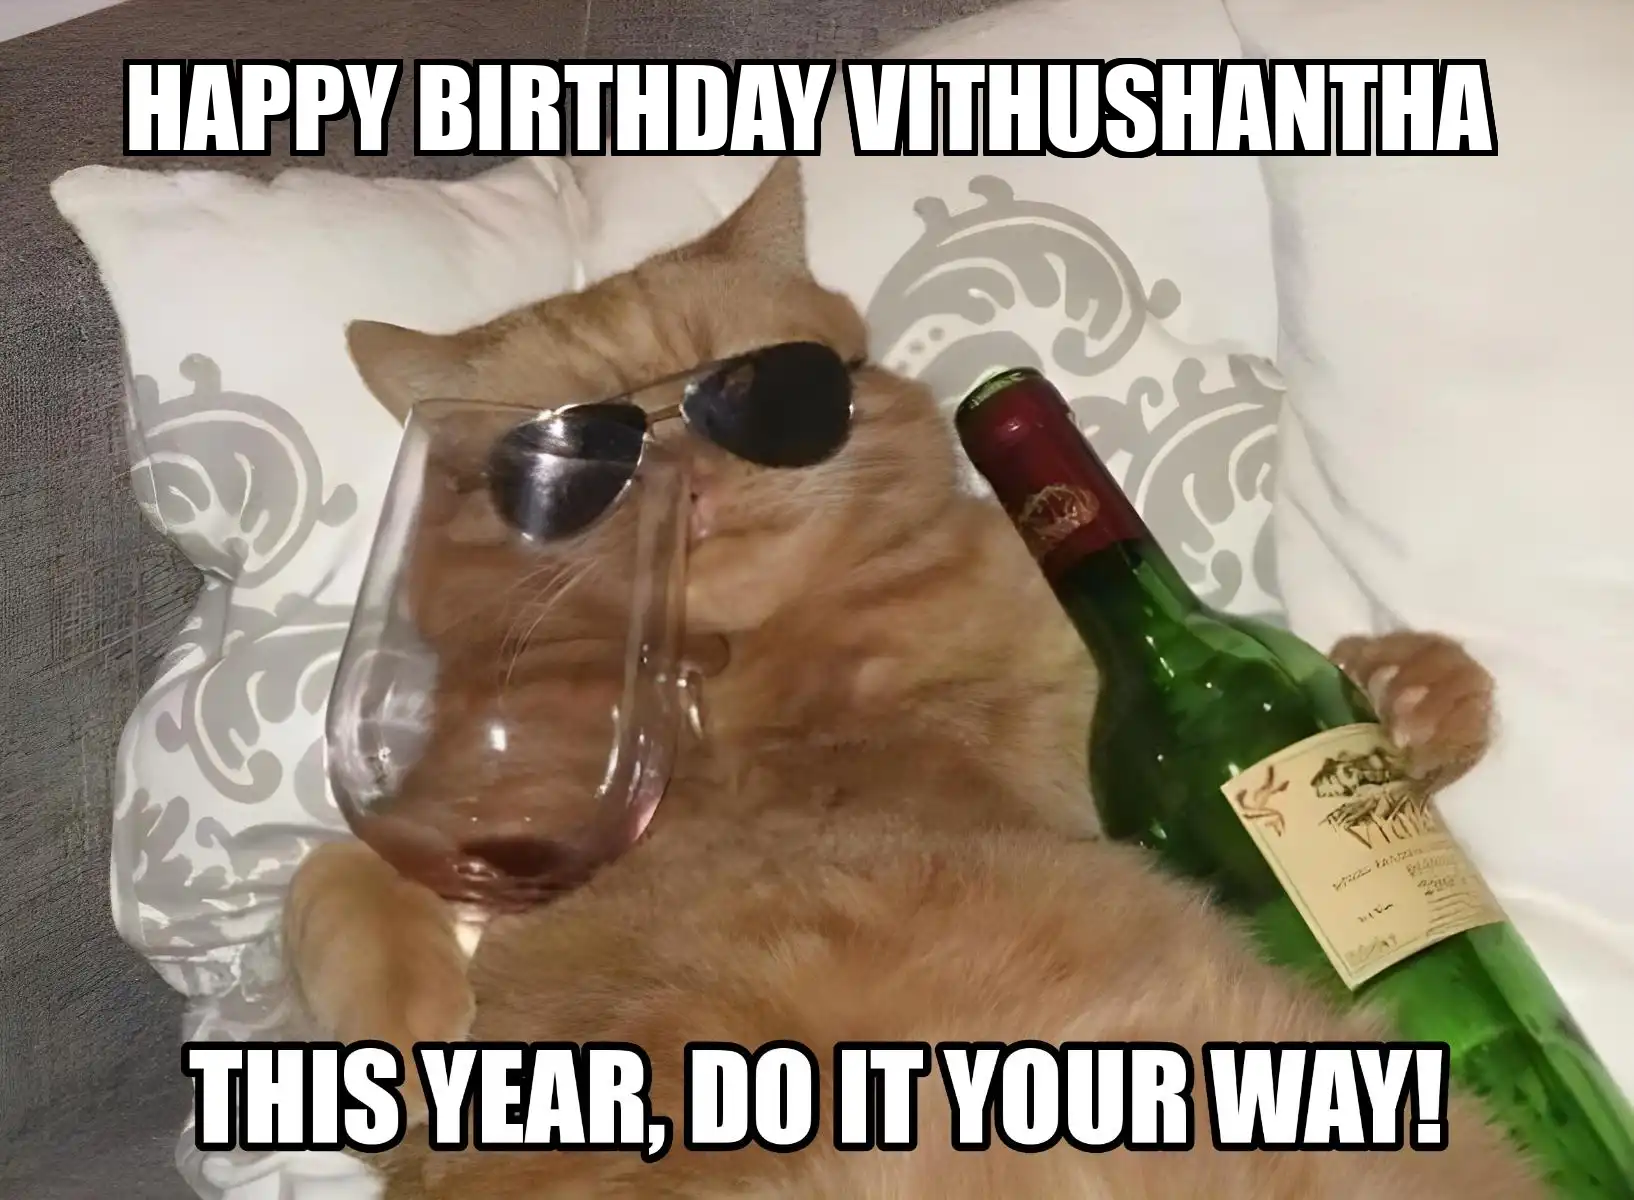 Happy Birthday Vithushantha This Year Do It Your Way Meme